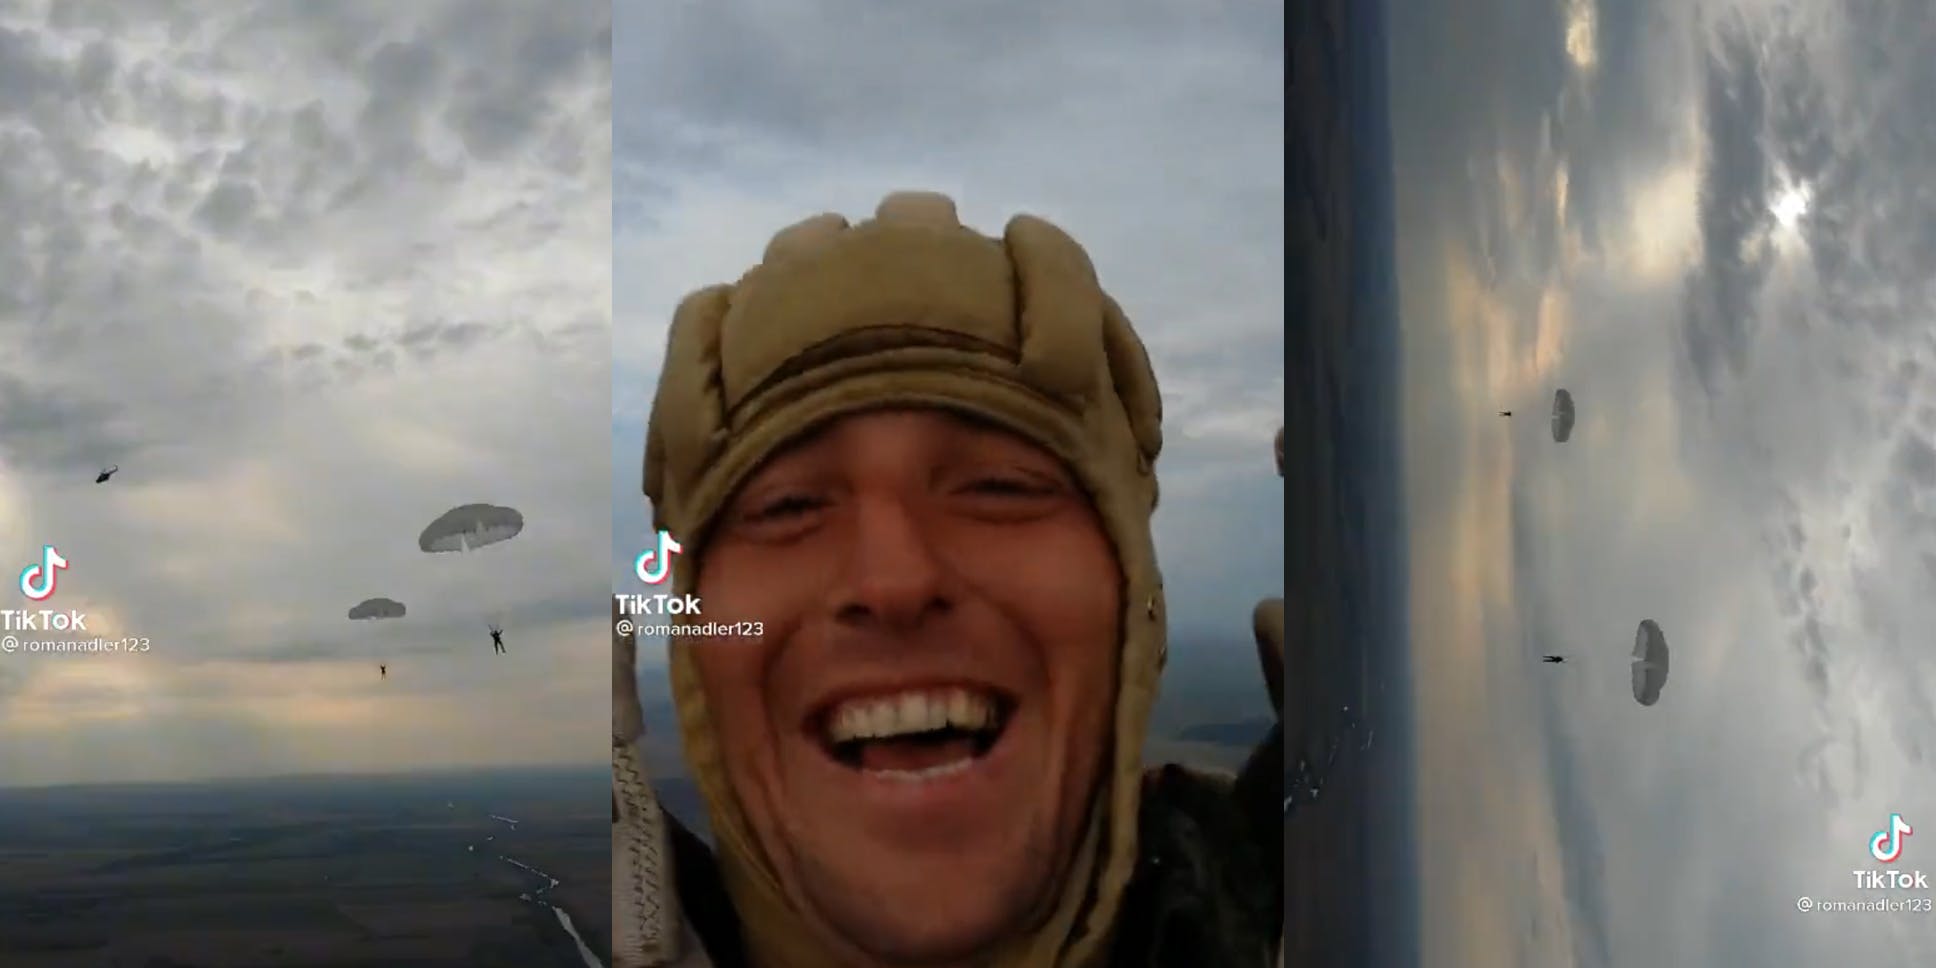 Screenshots of a TikTok purporting to show a Russian soldier parachuting into Ukraine.